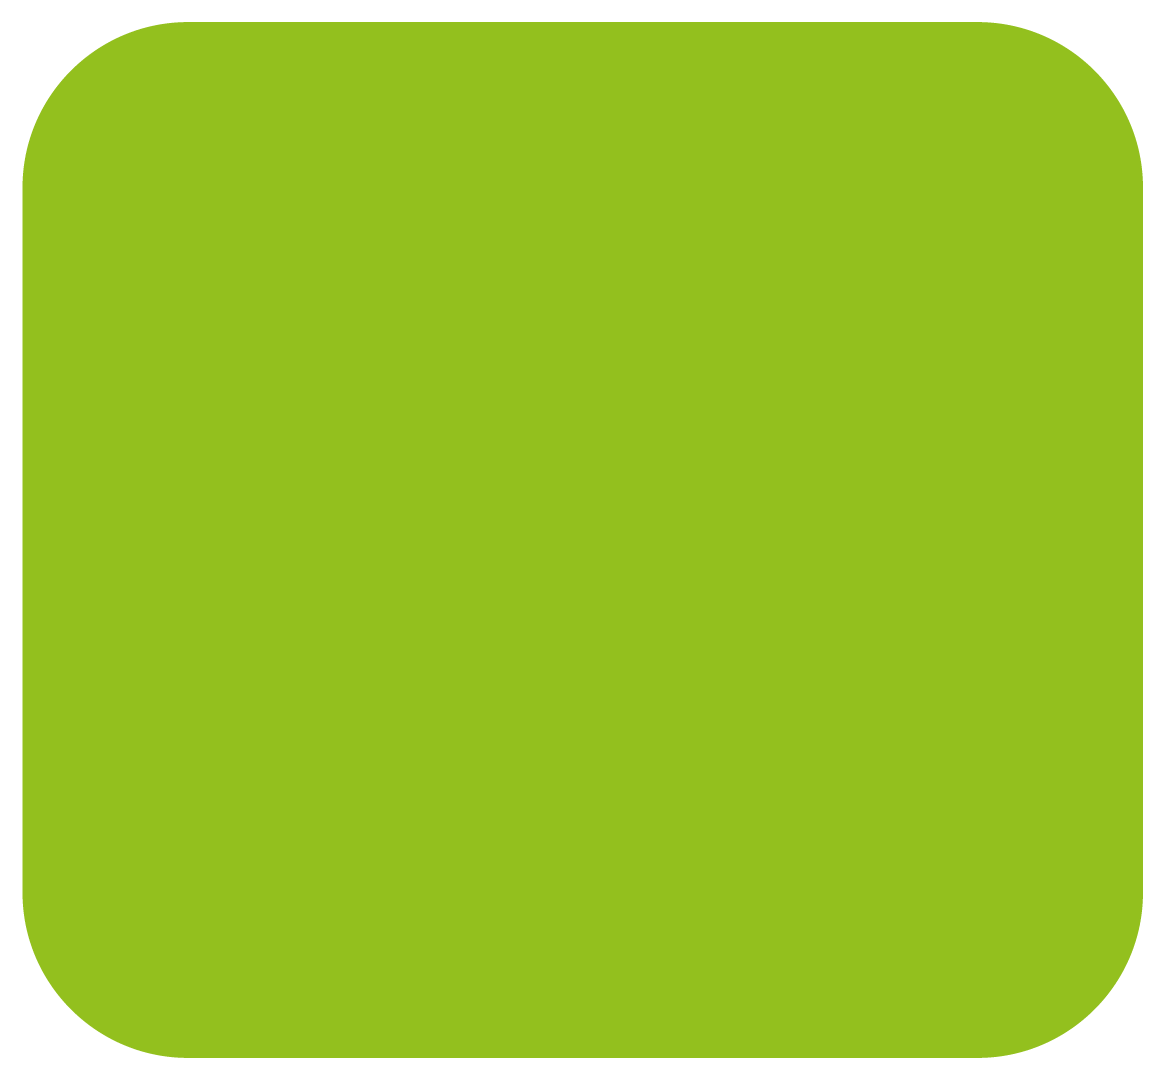 Cuadro verde con borde blanco oes.com.do